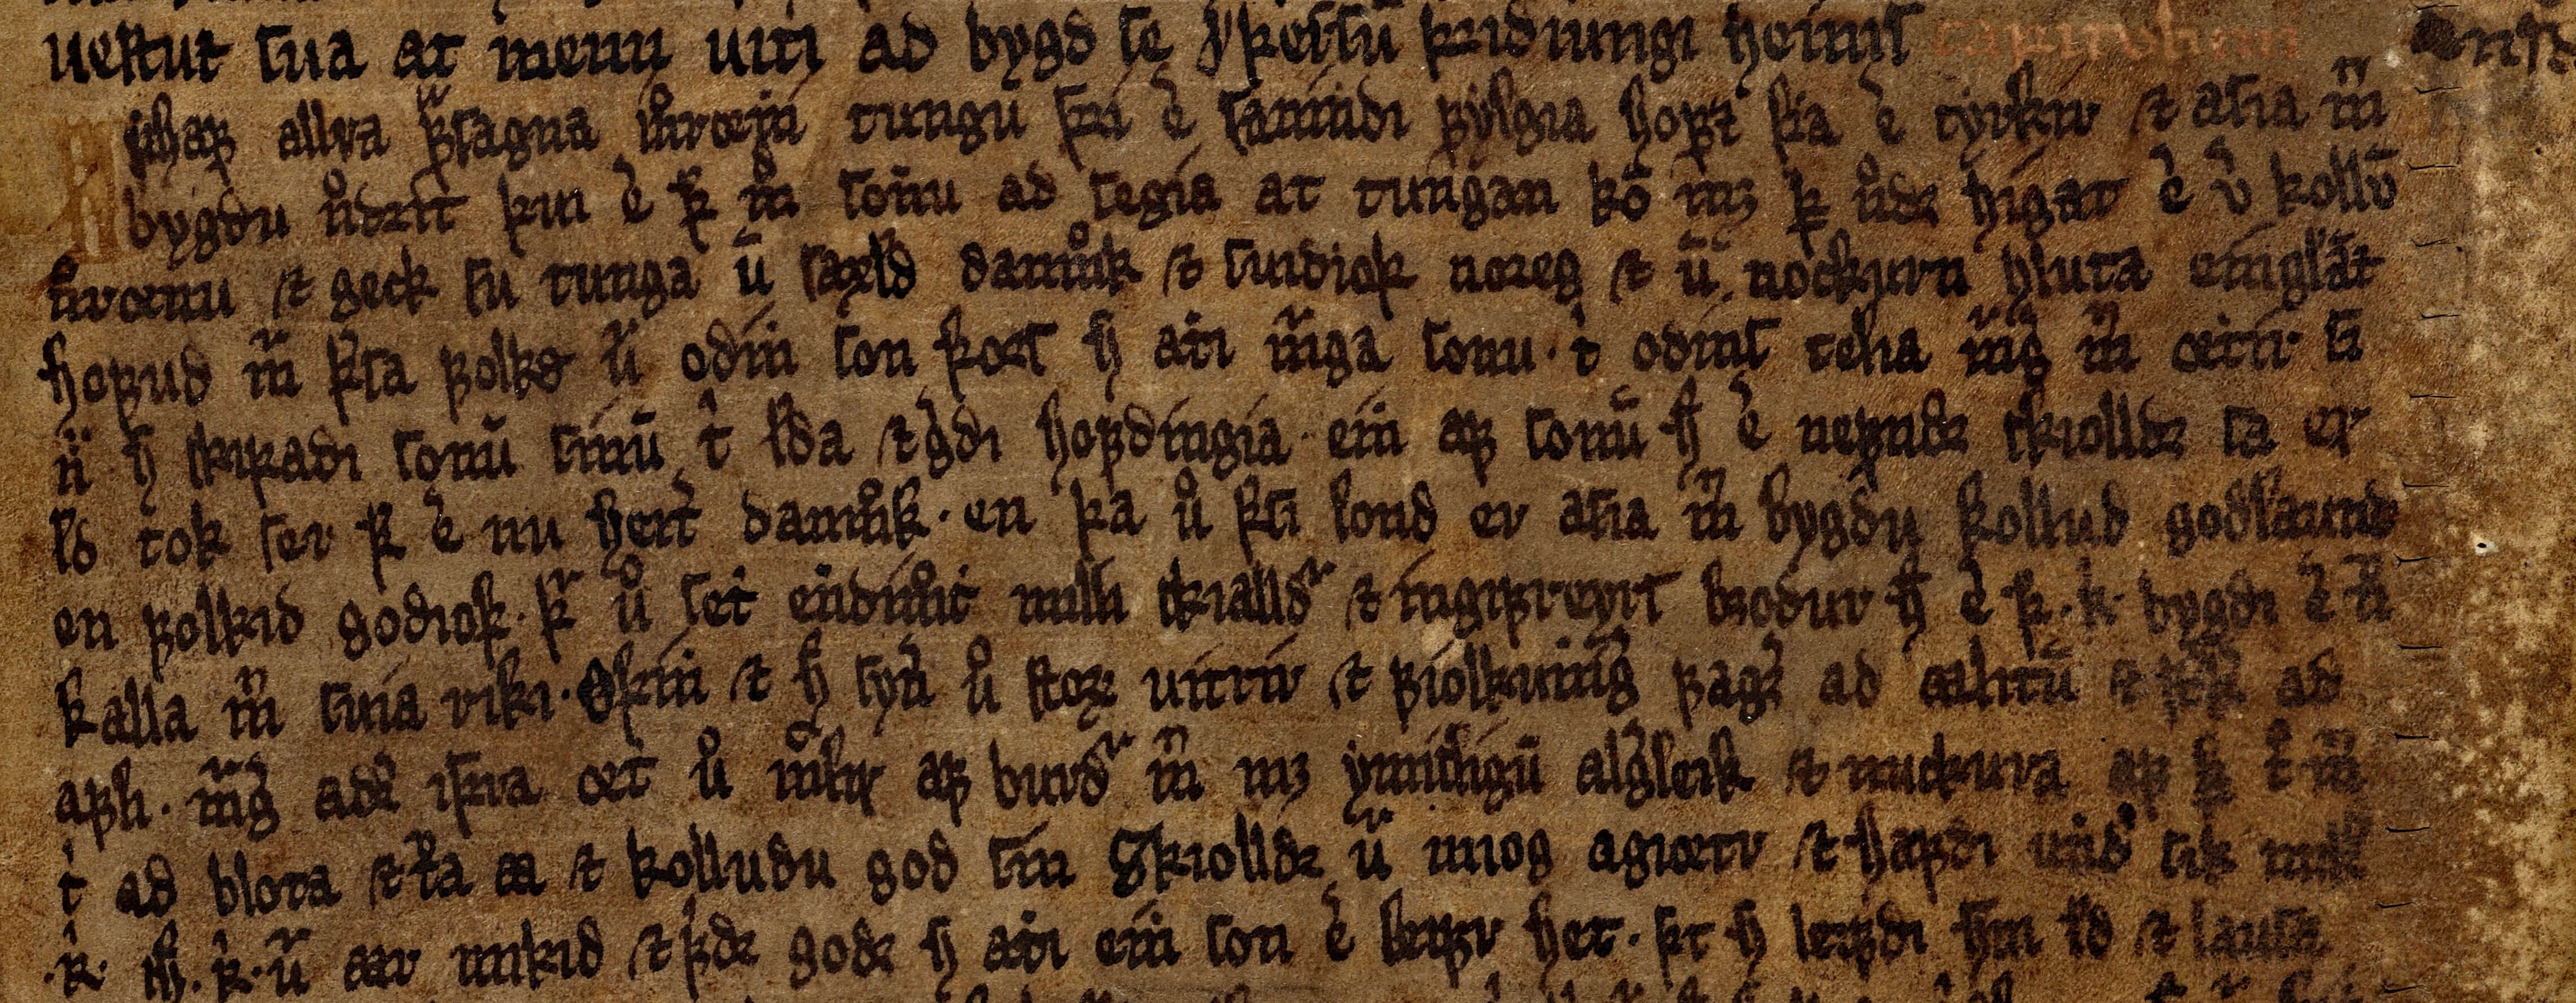 Opening lines of Upphaf allra frásagna (AM 764 4to, 40r)